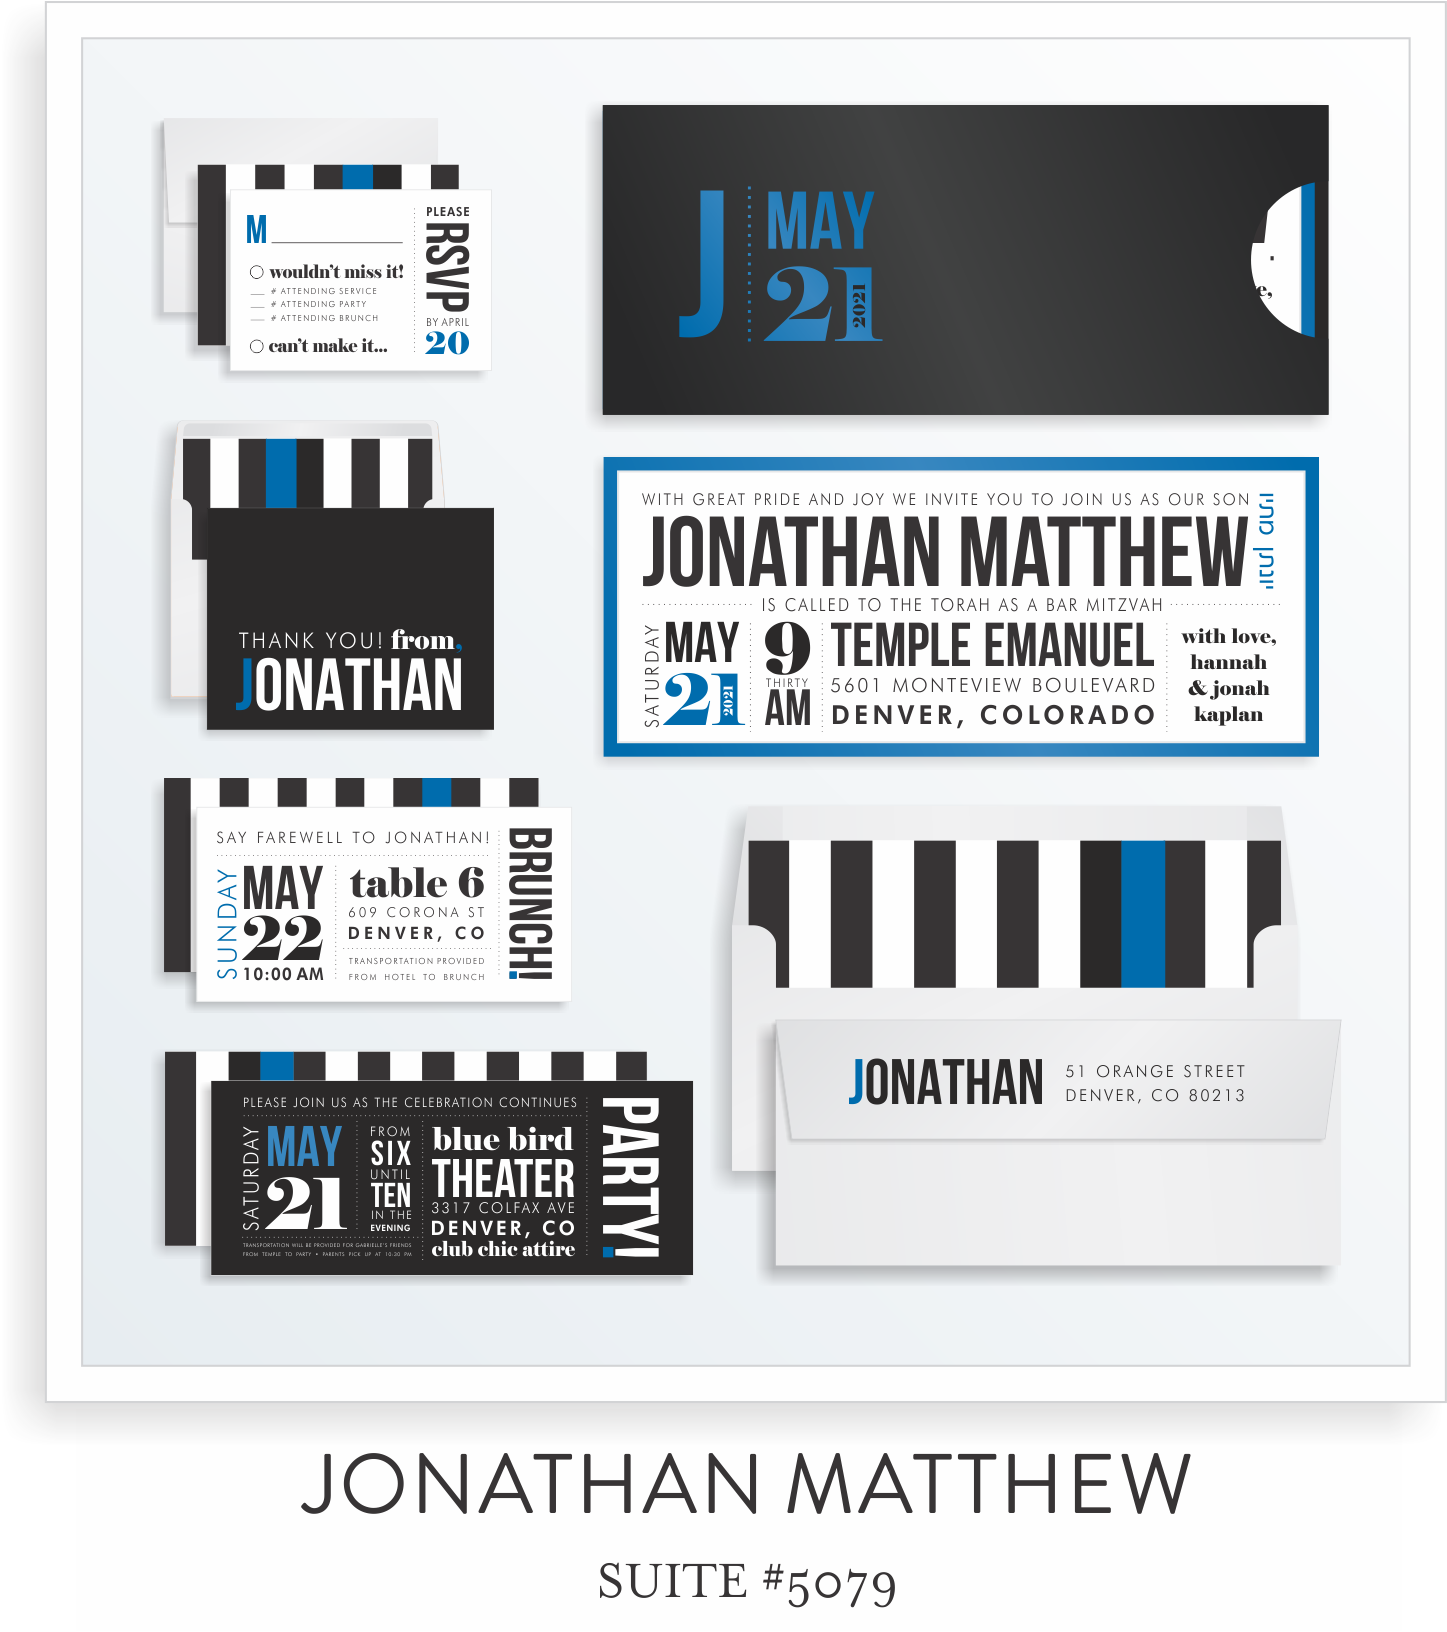 5079 JONATHAN MATTHEW SUITE THUMB.png